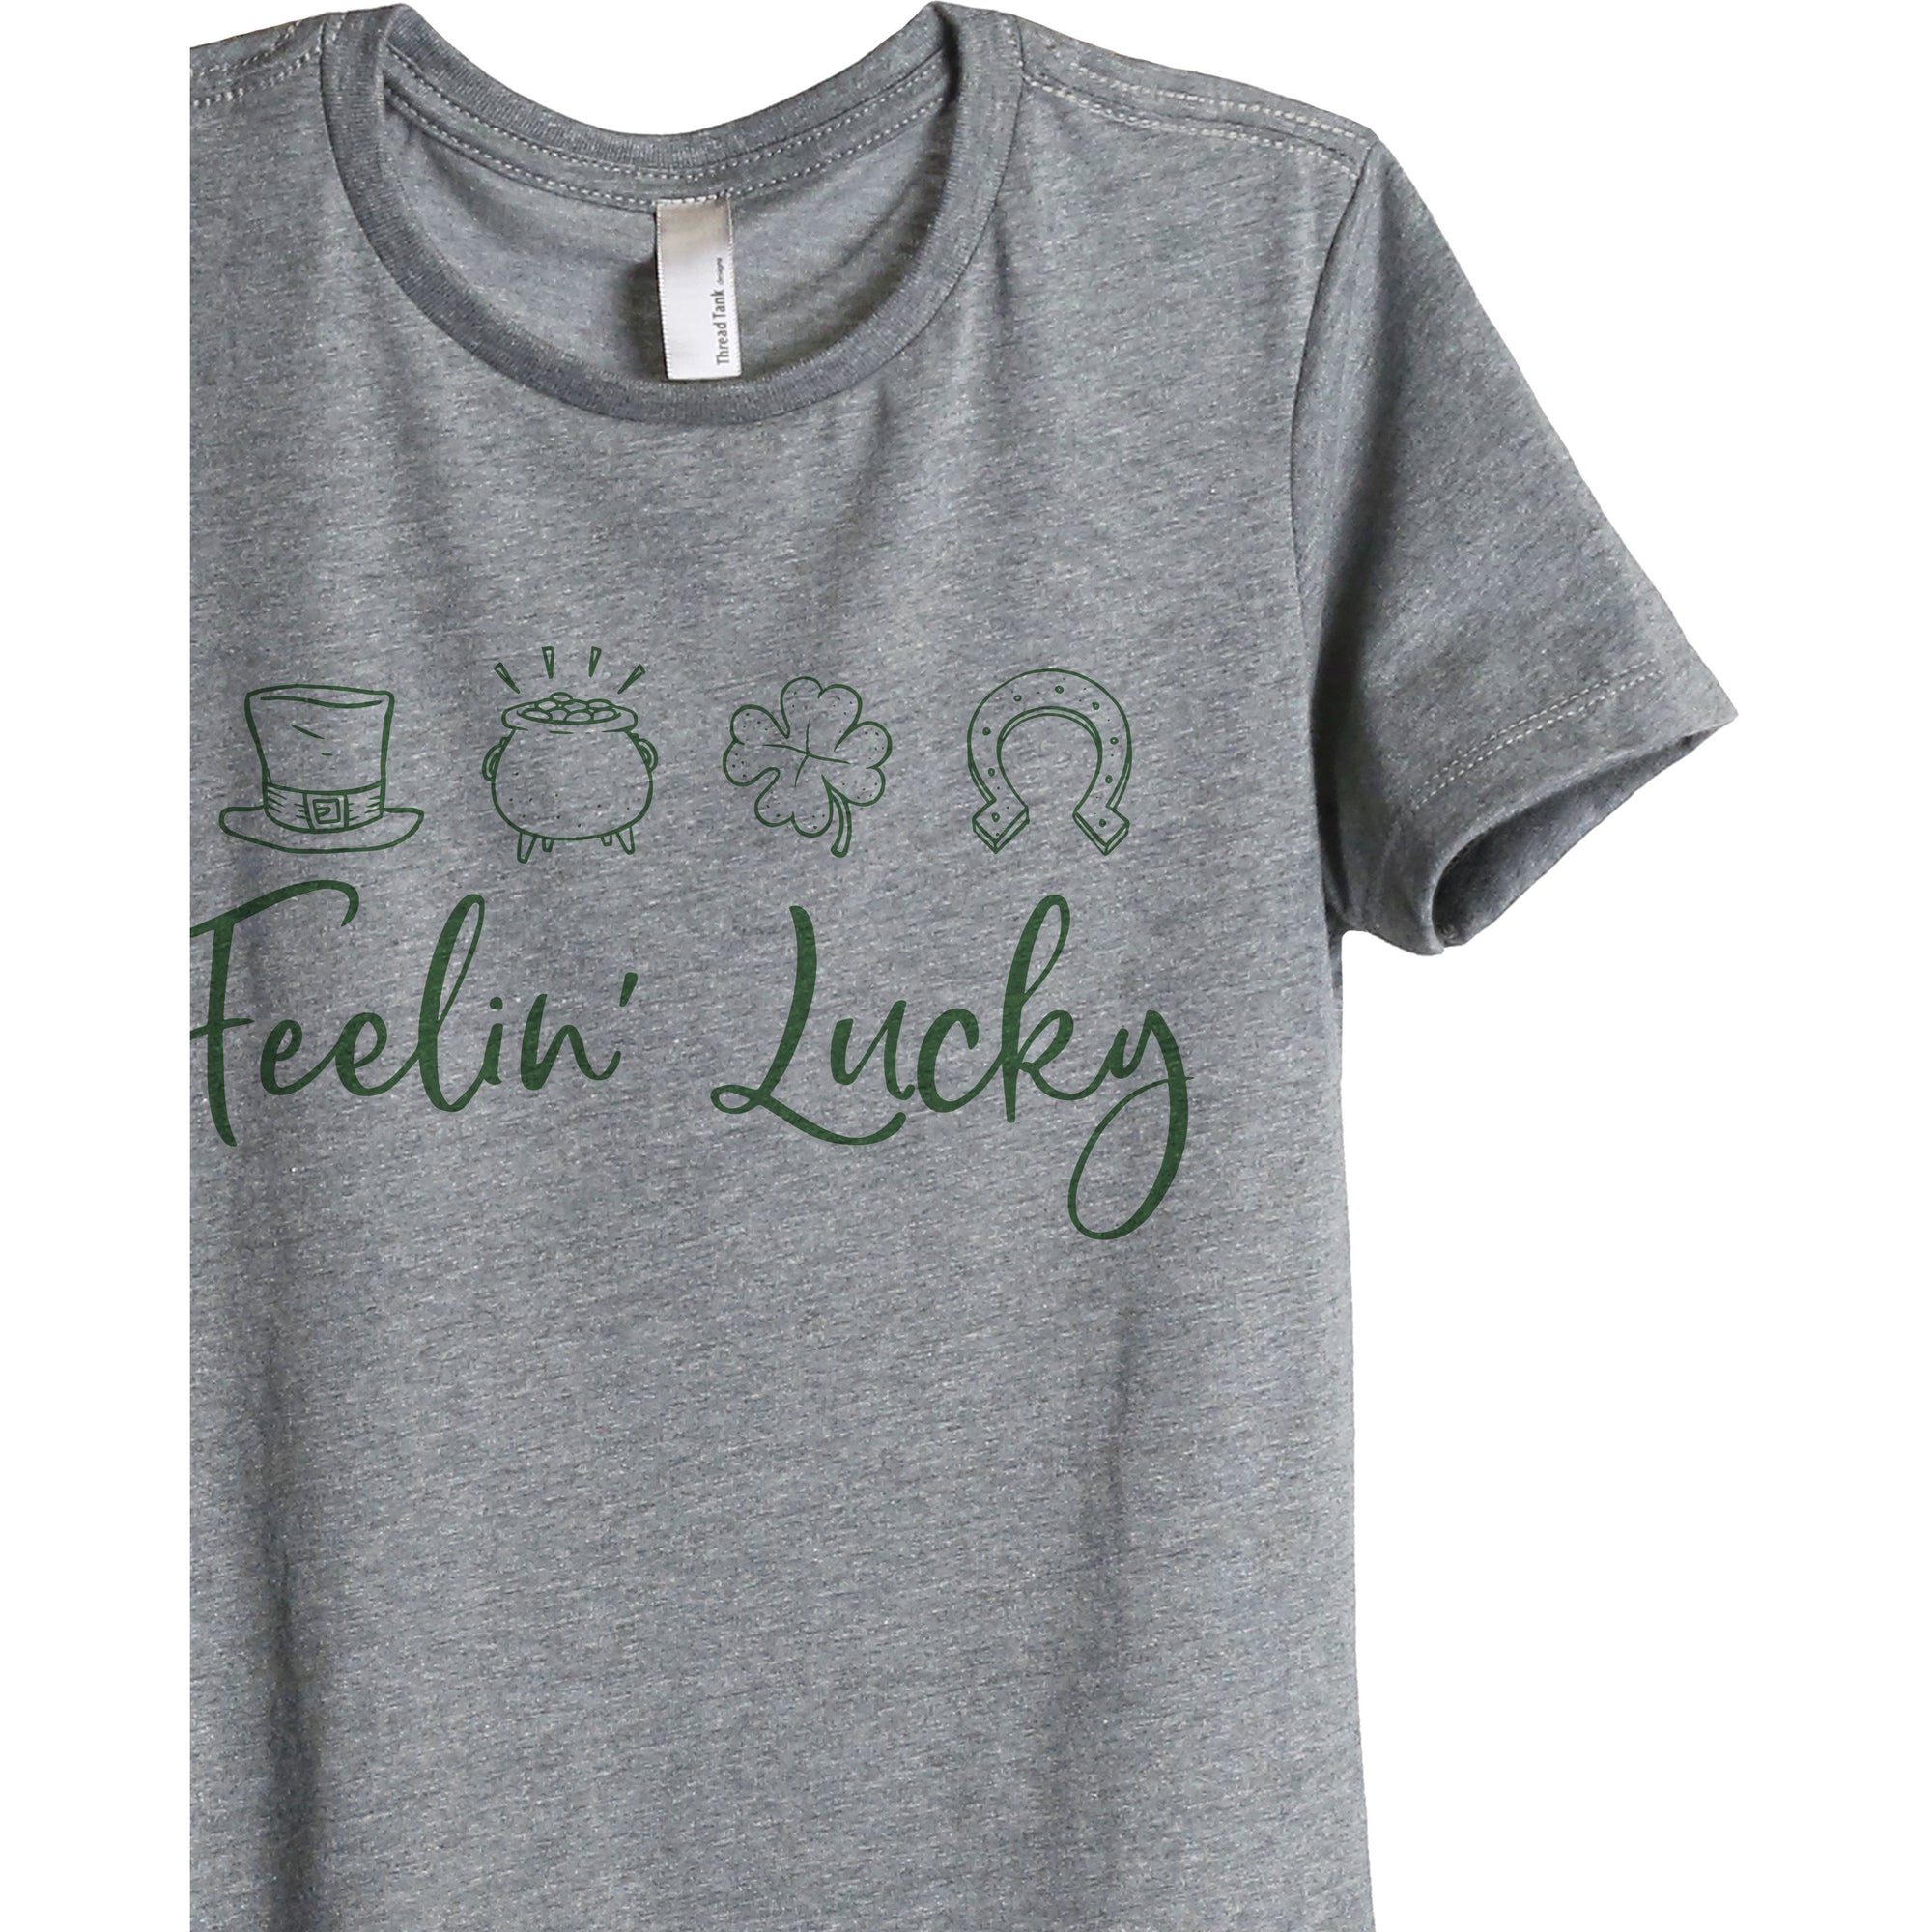 Feelin' Lucky Women's Relaxed Crewneck T-Shirt Top Tee Heather Grey Exclusive Green Zoom Details
